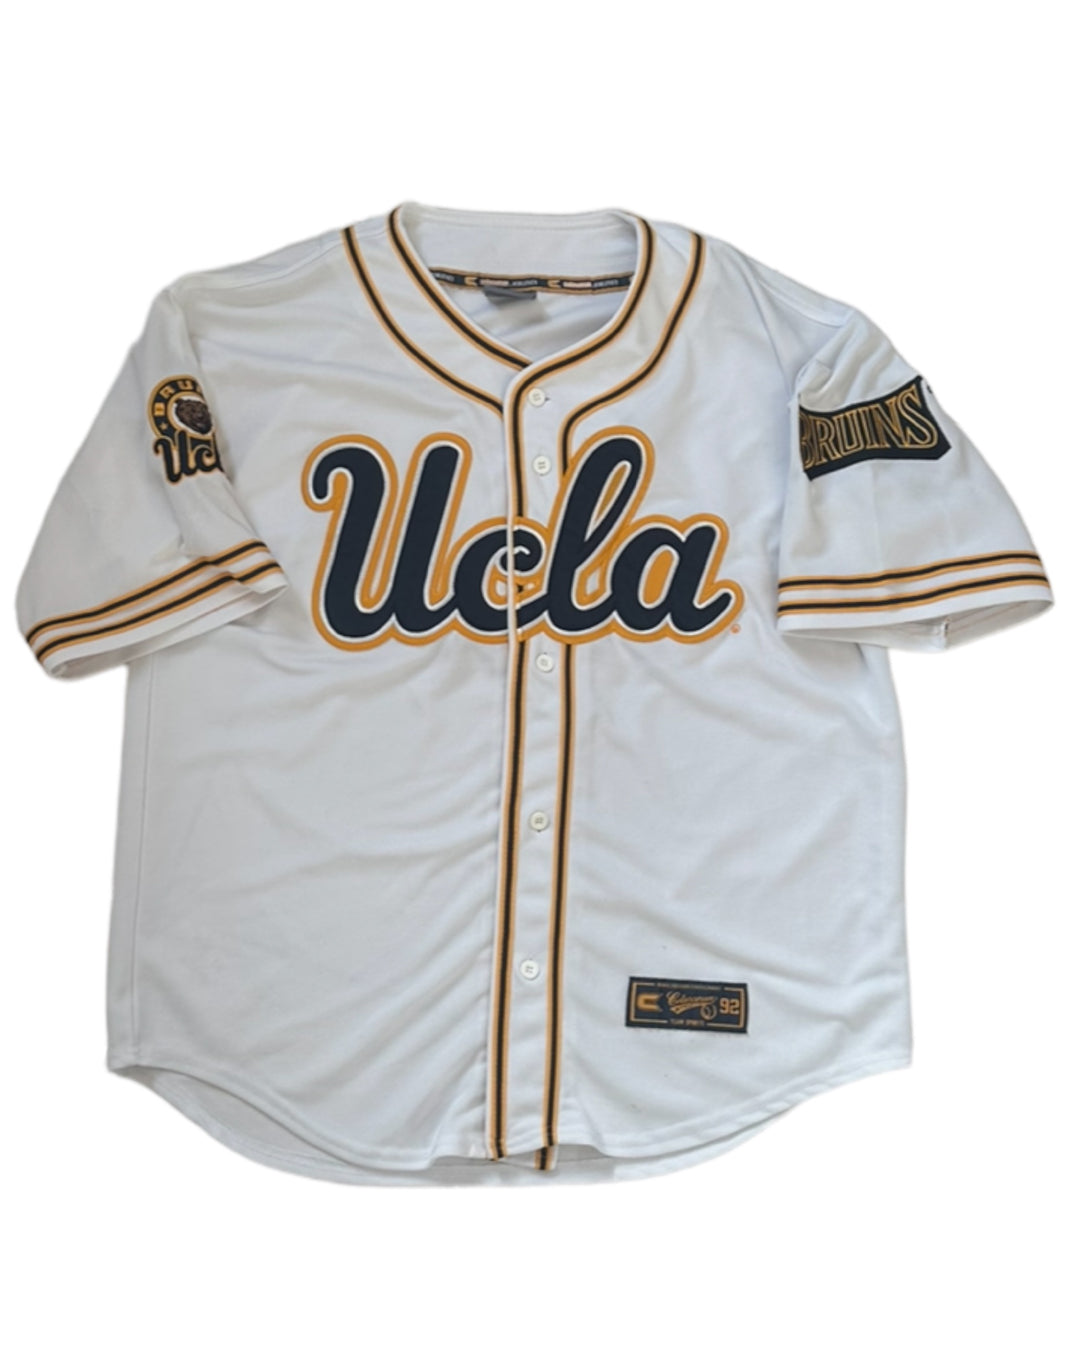 UCLA Vintage Jersey